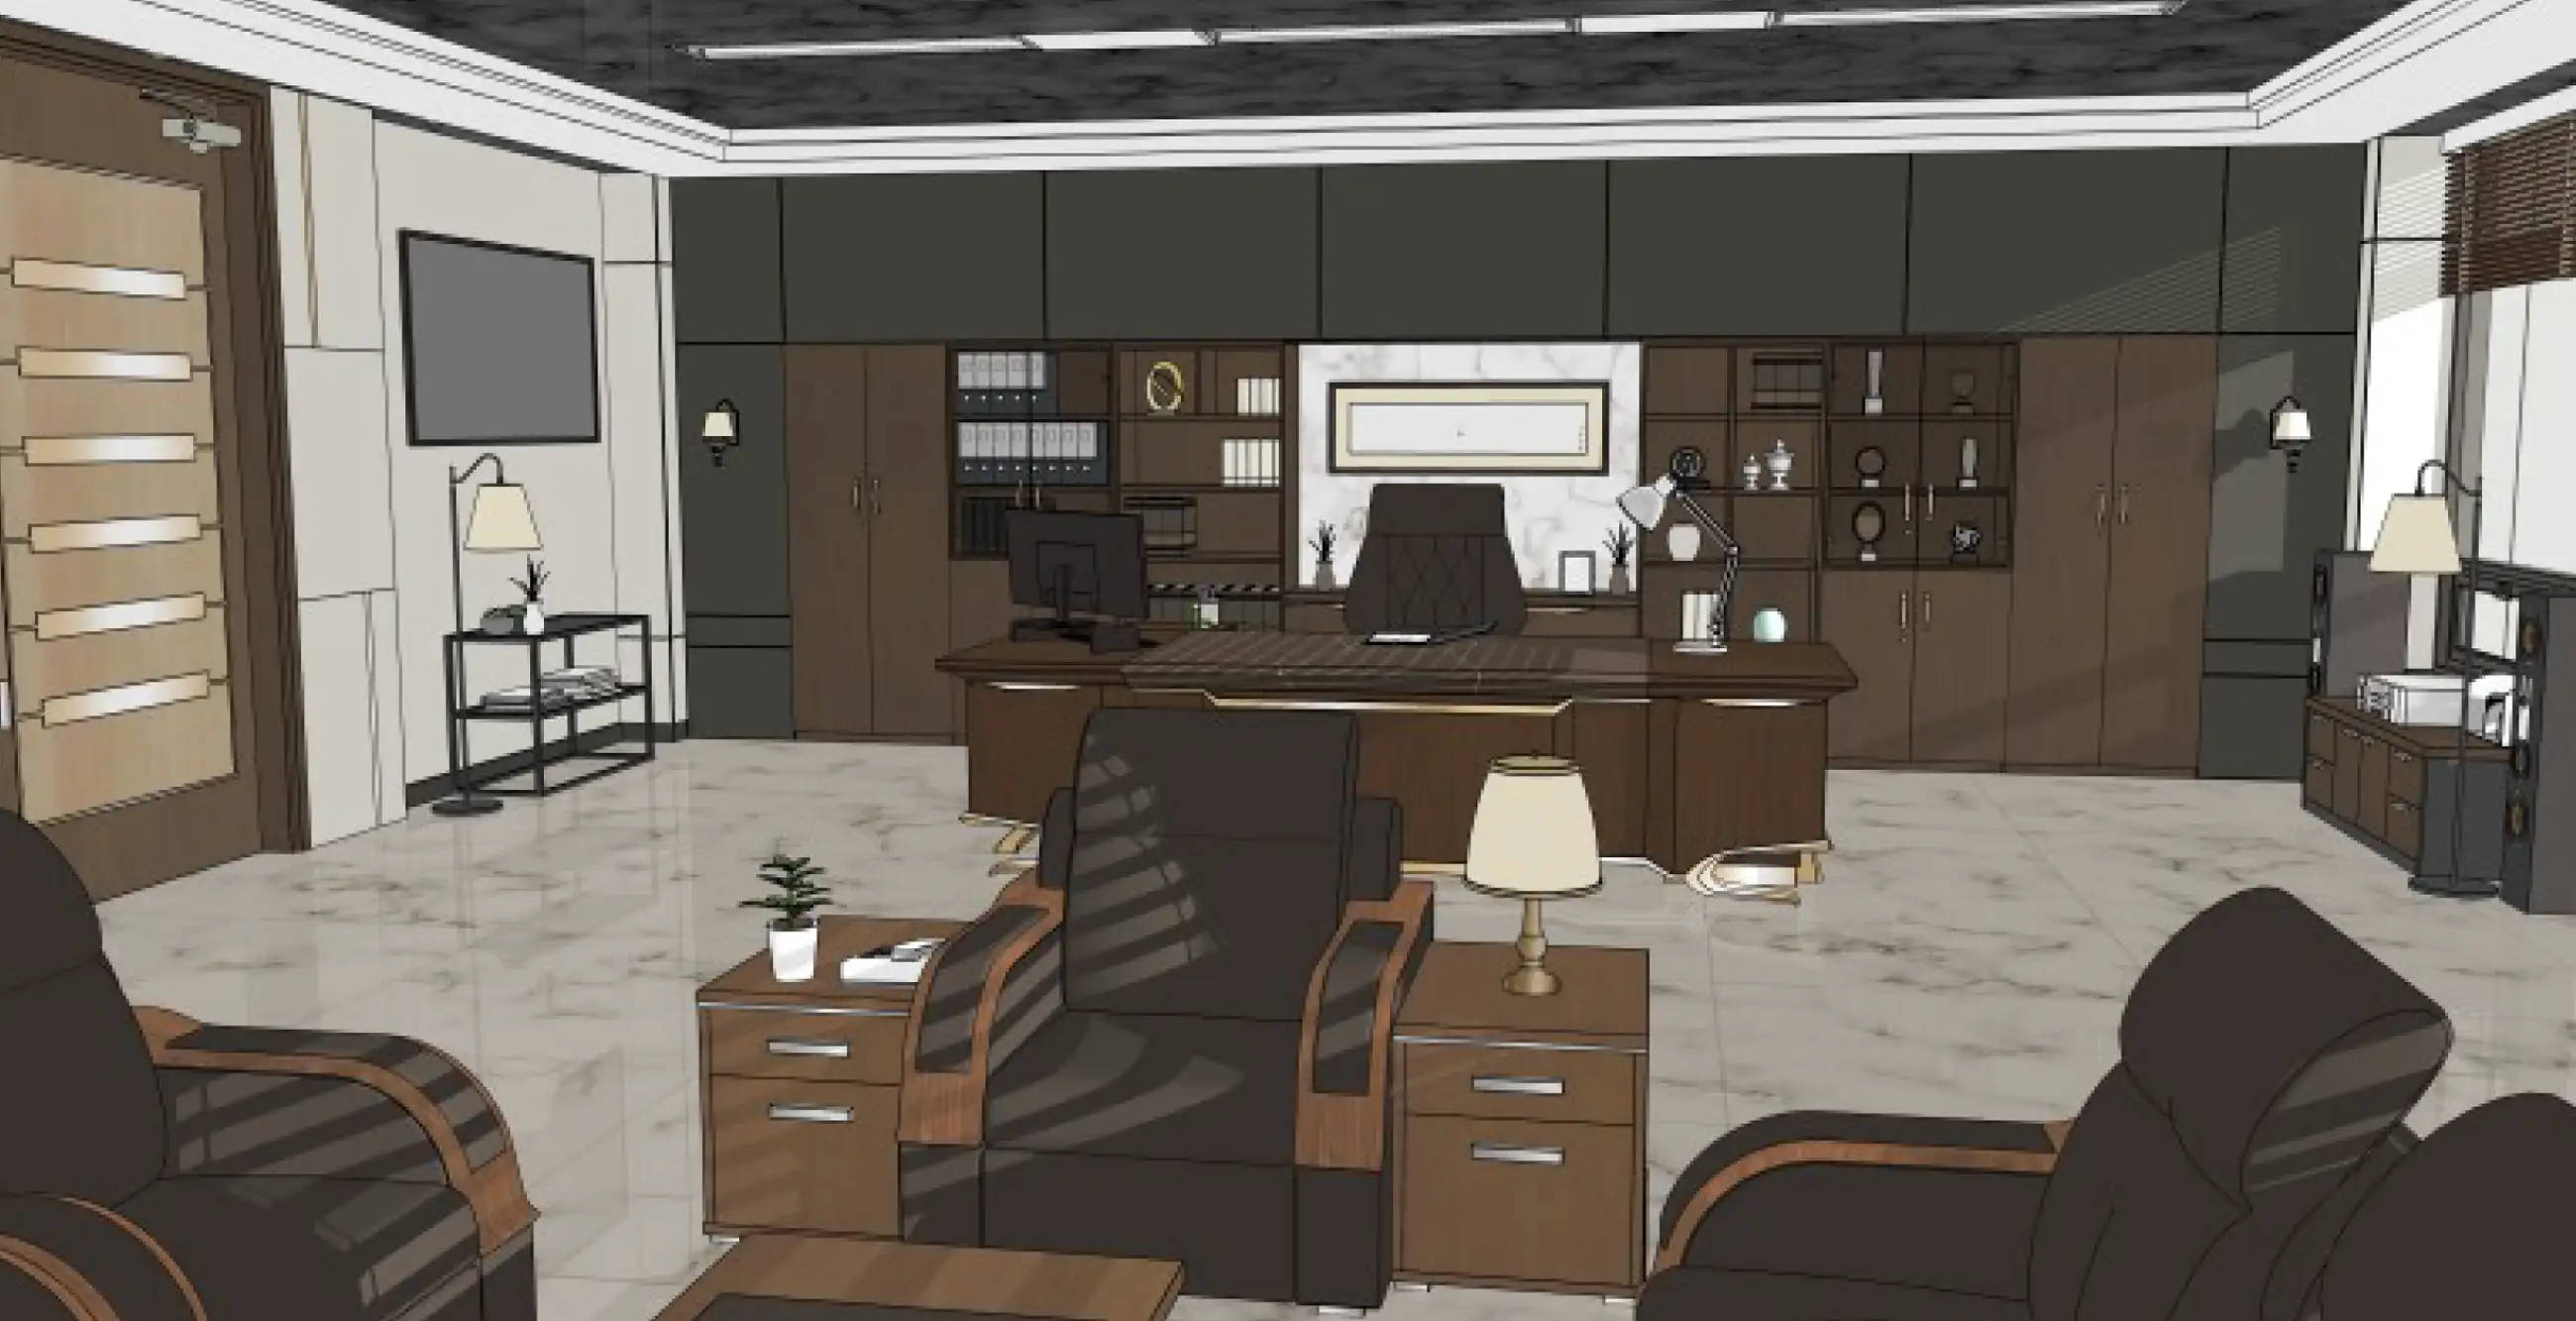 [Company set] President's office and secretary's office